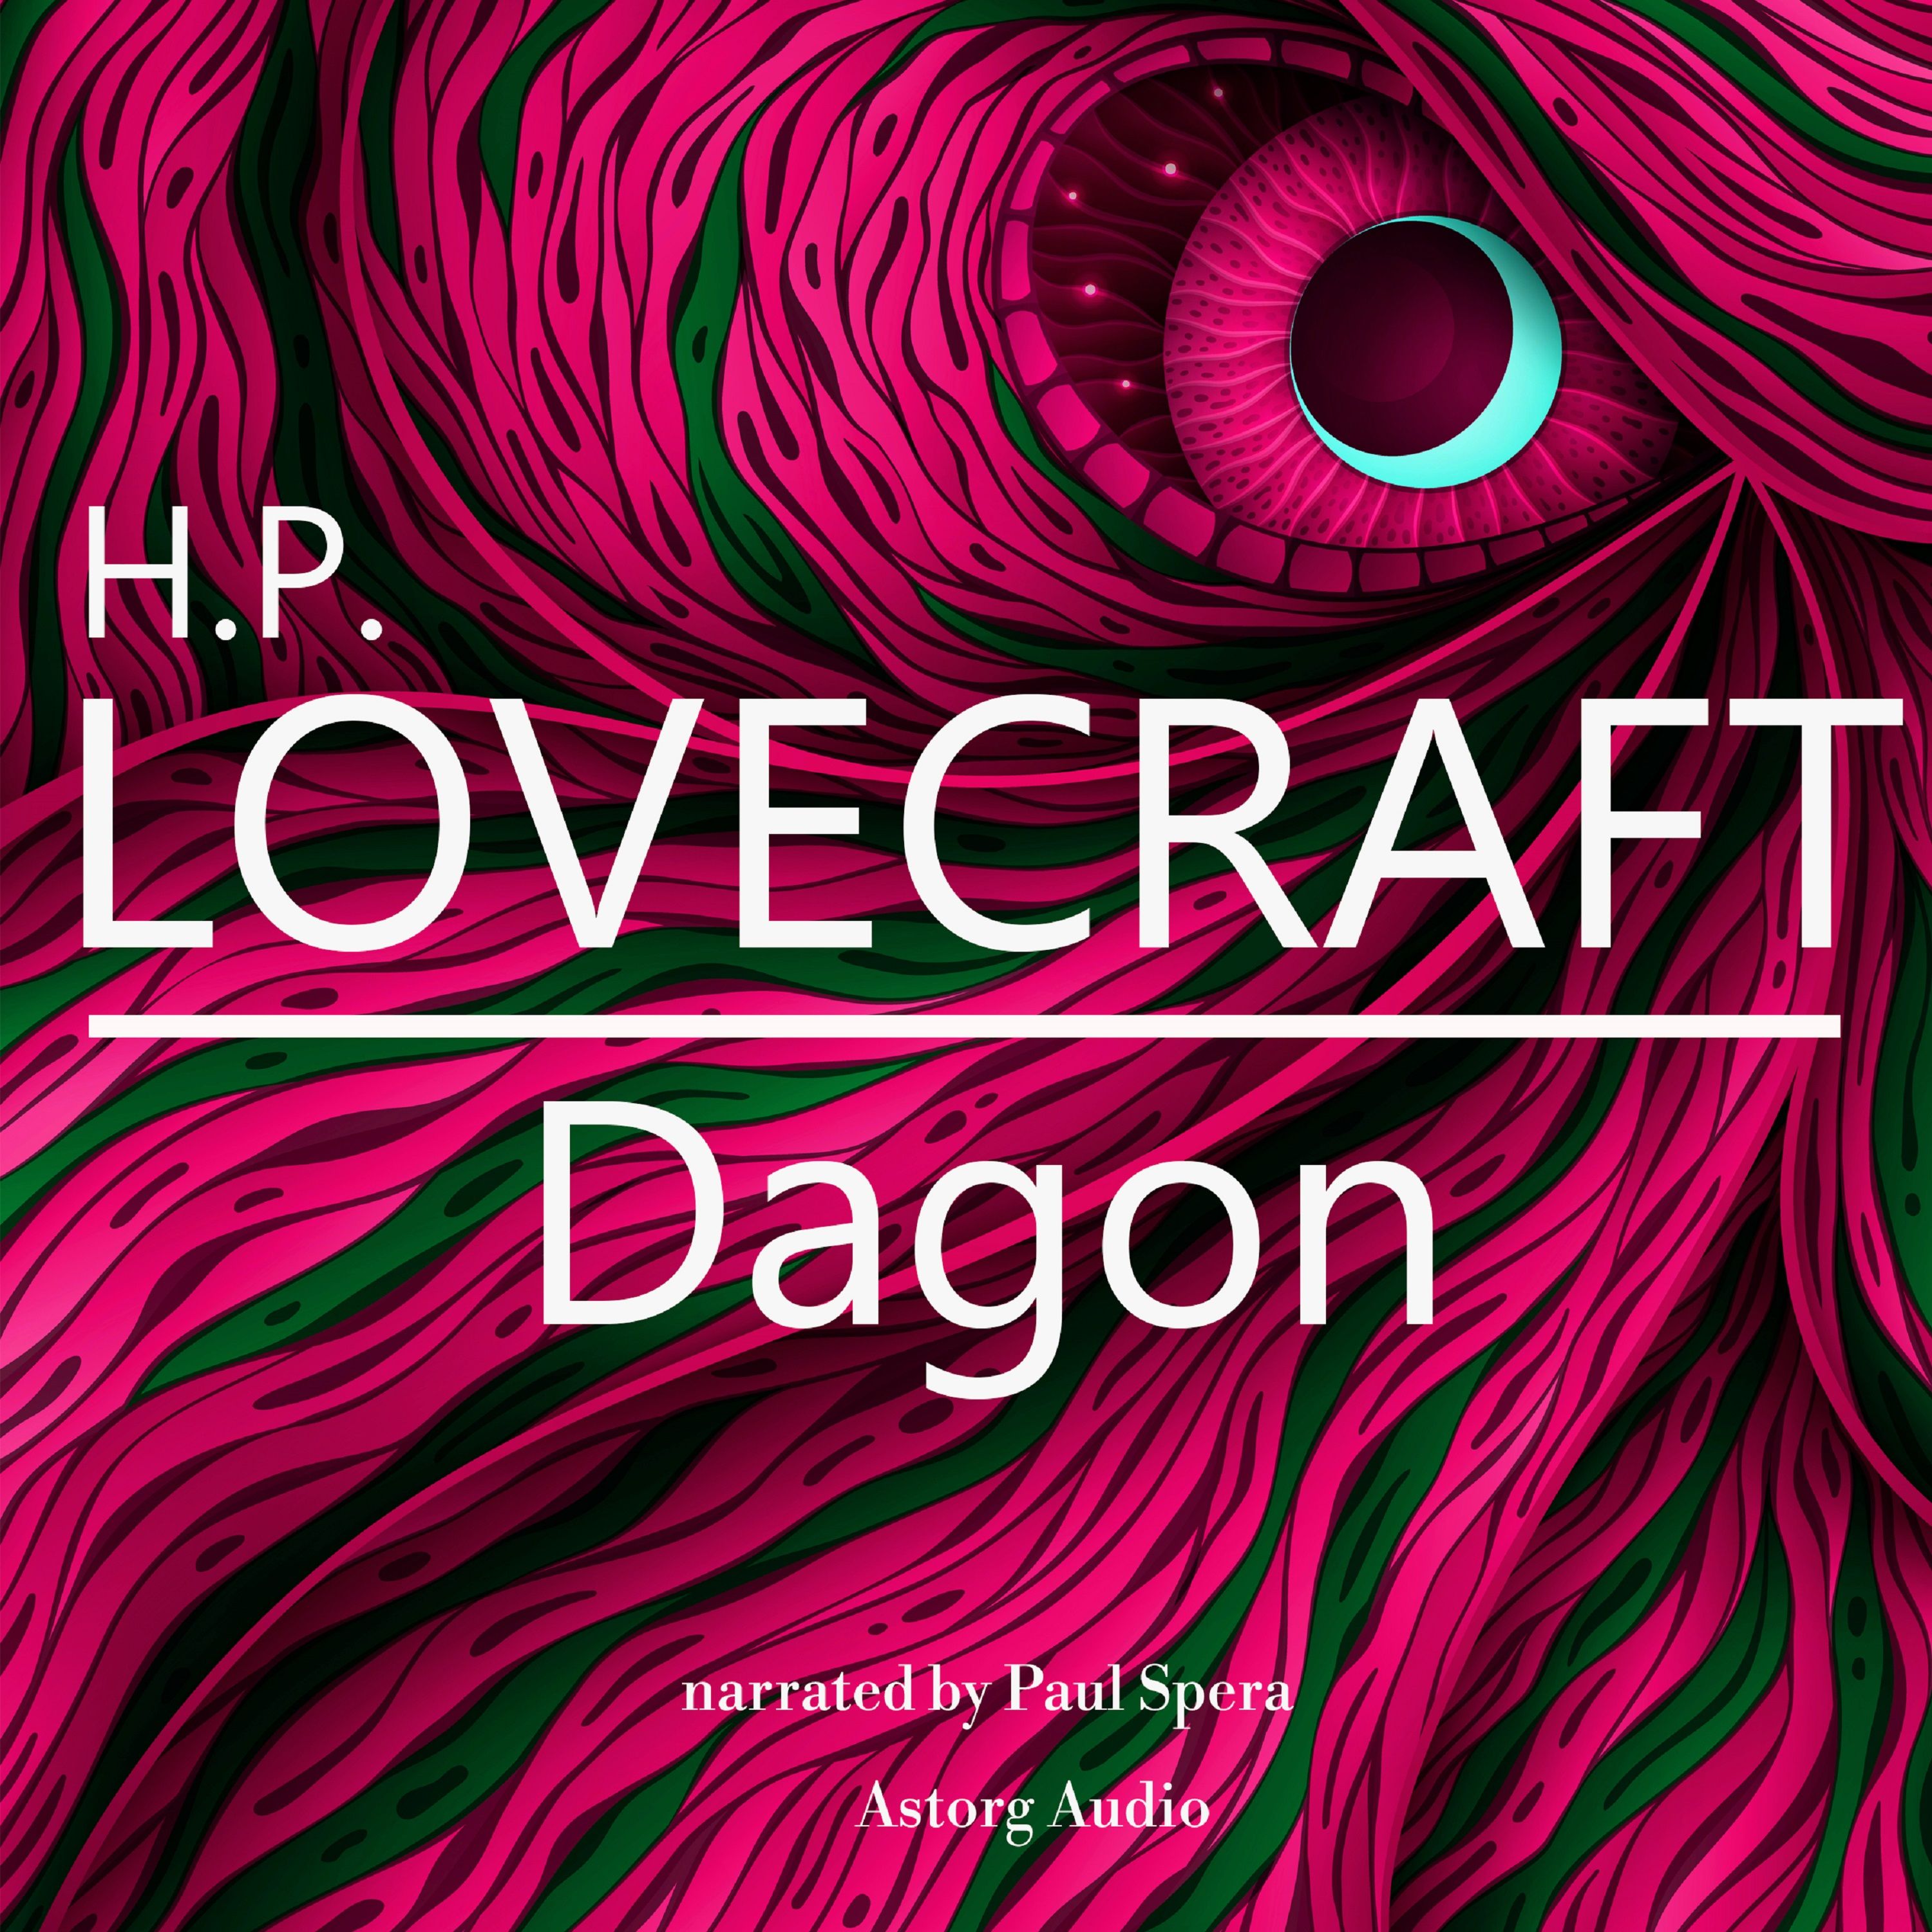 H. P. Lovecraft : Dagon, audiobook by H. P. Lovecraft